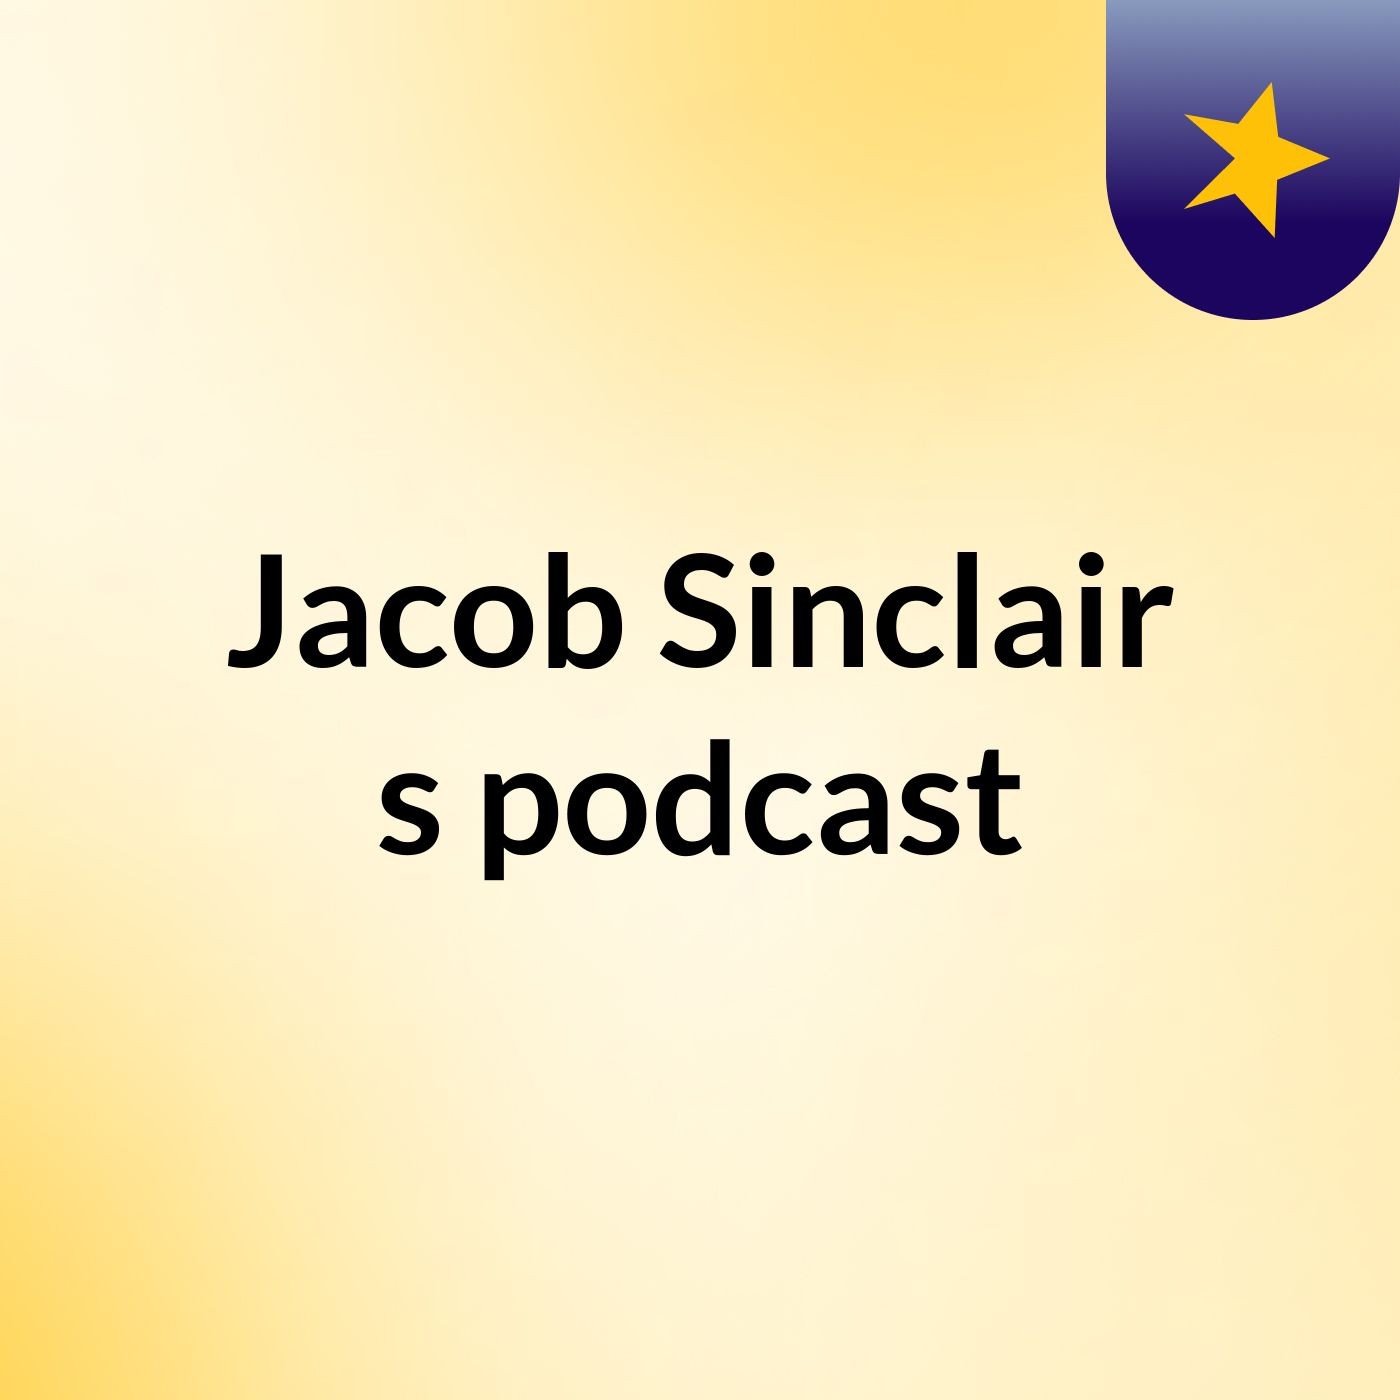 Jacob Sinclair's podcast